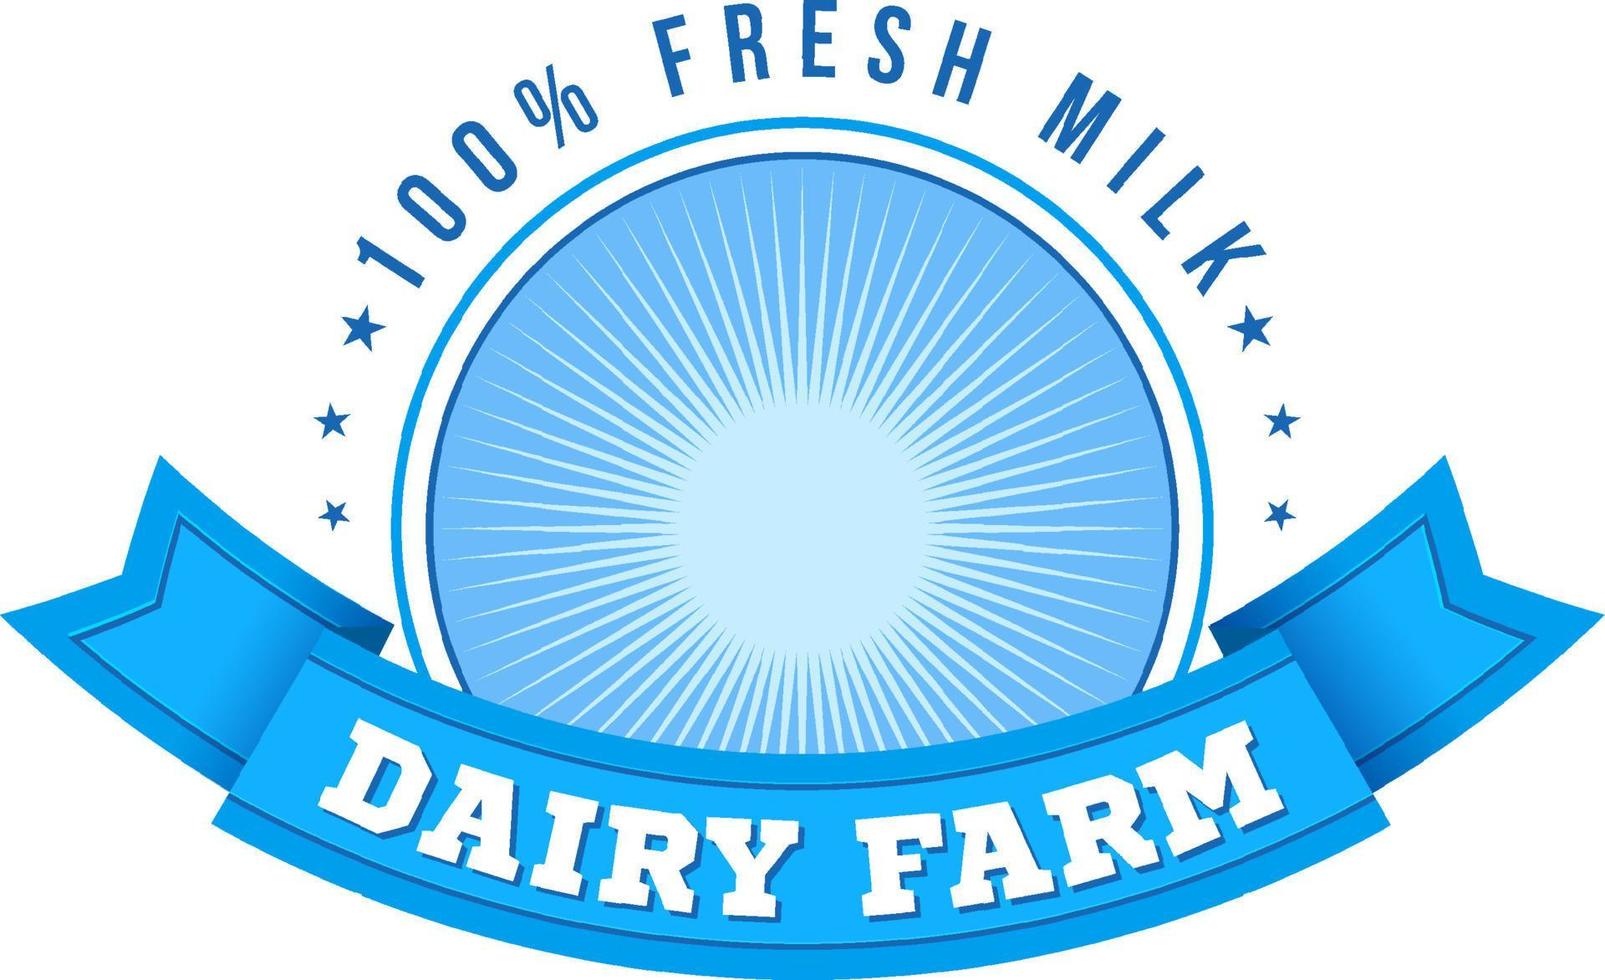 A Dairy farm text label vector